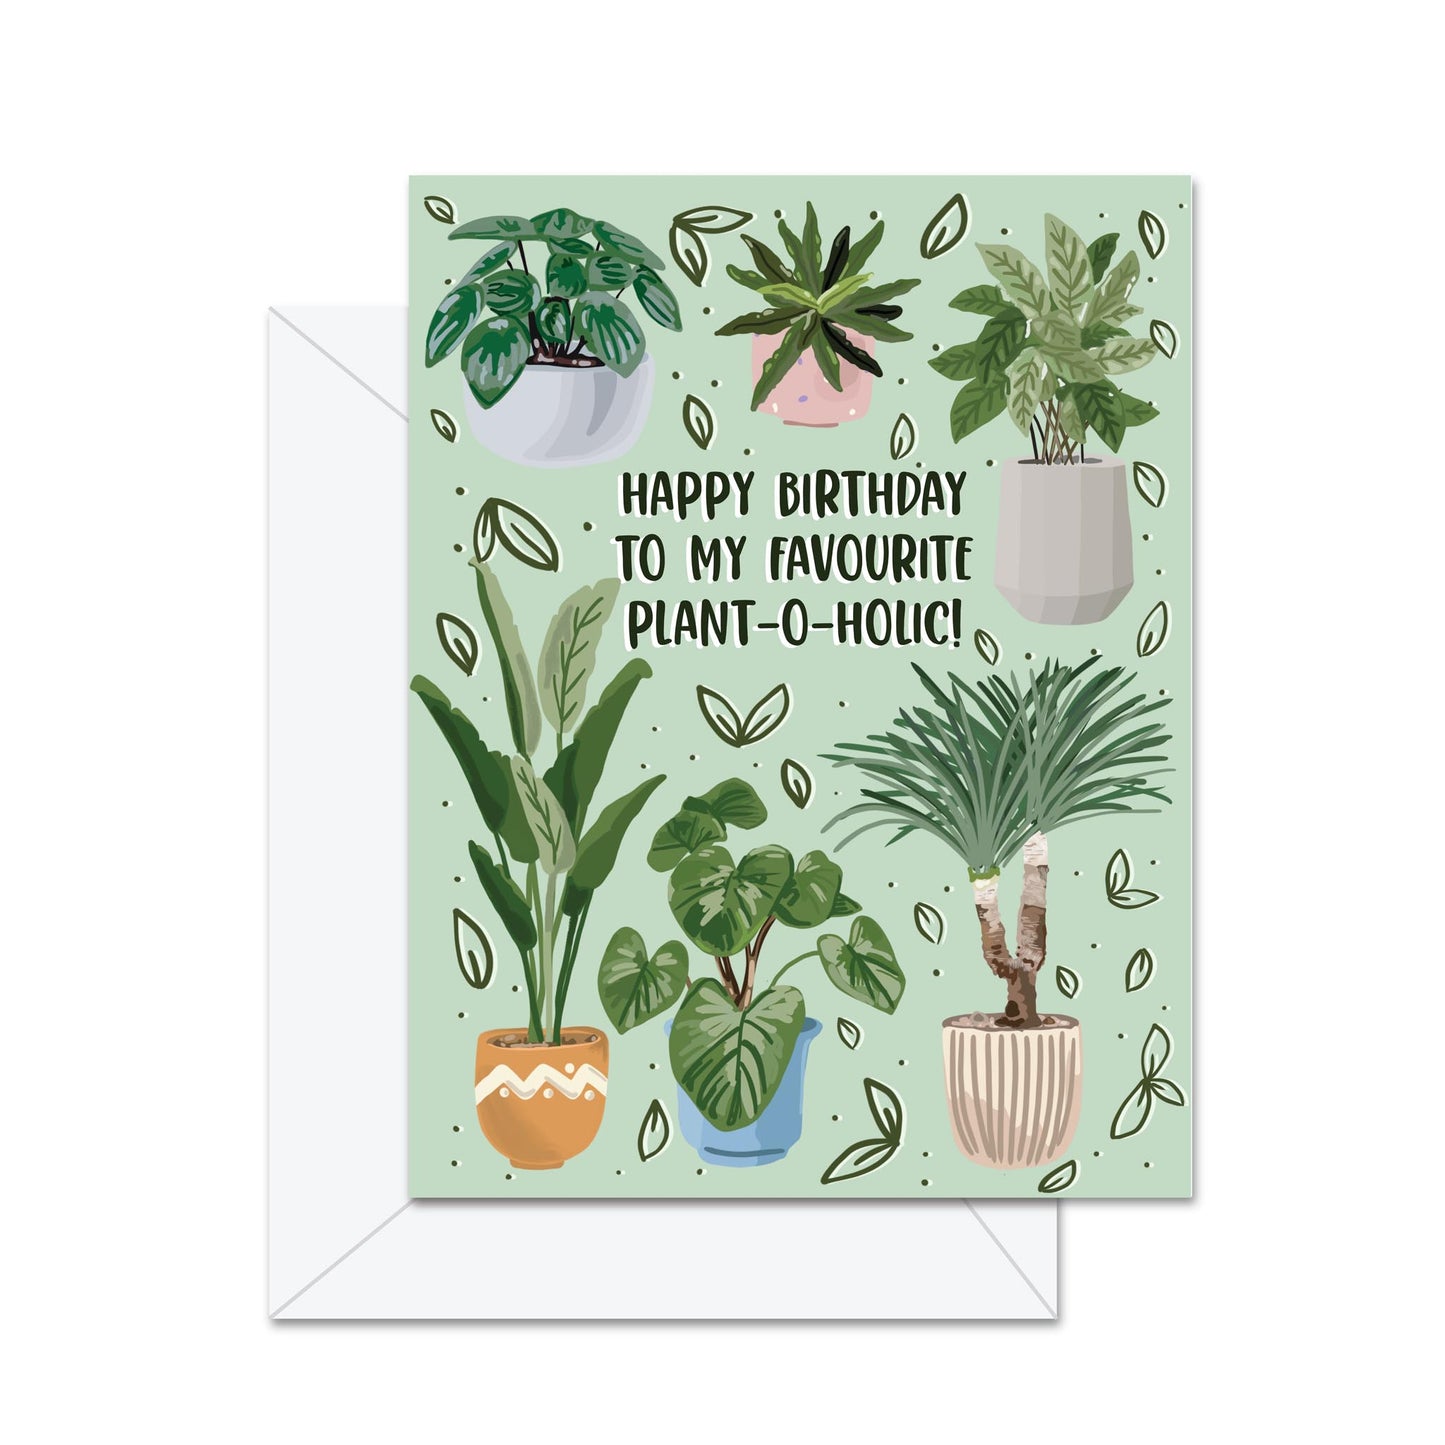 Happy Birthday To My Favourite Plant-o-Holic! - Greeting Card